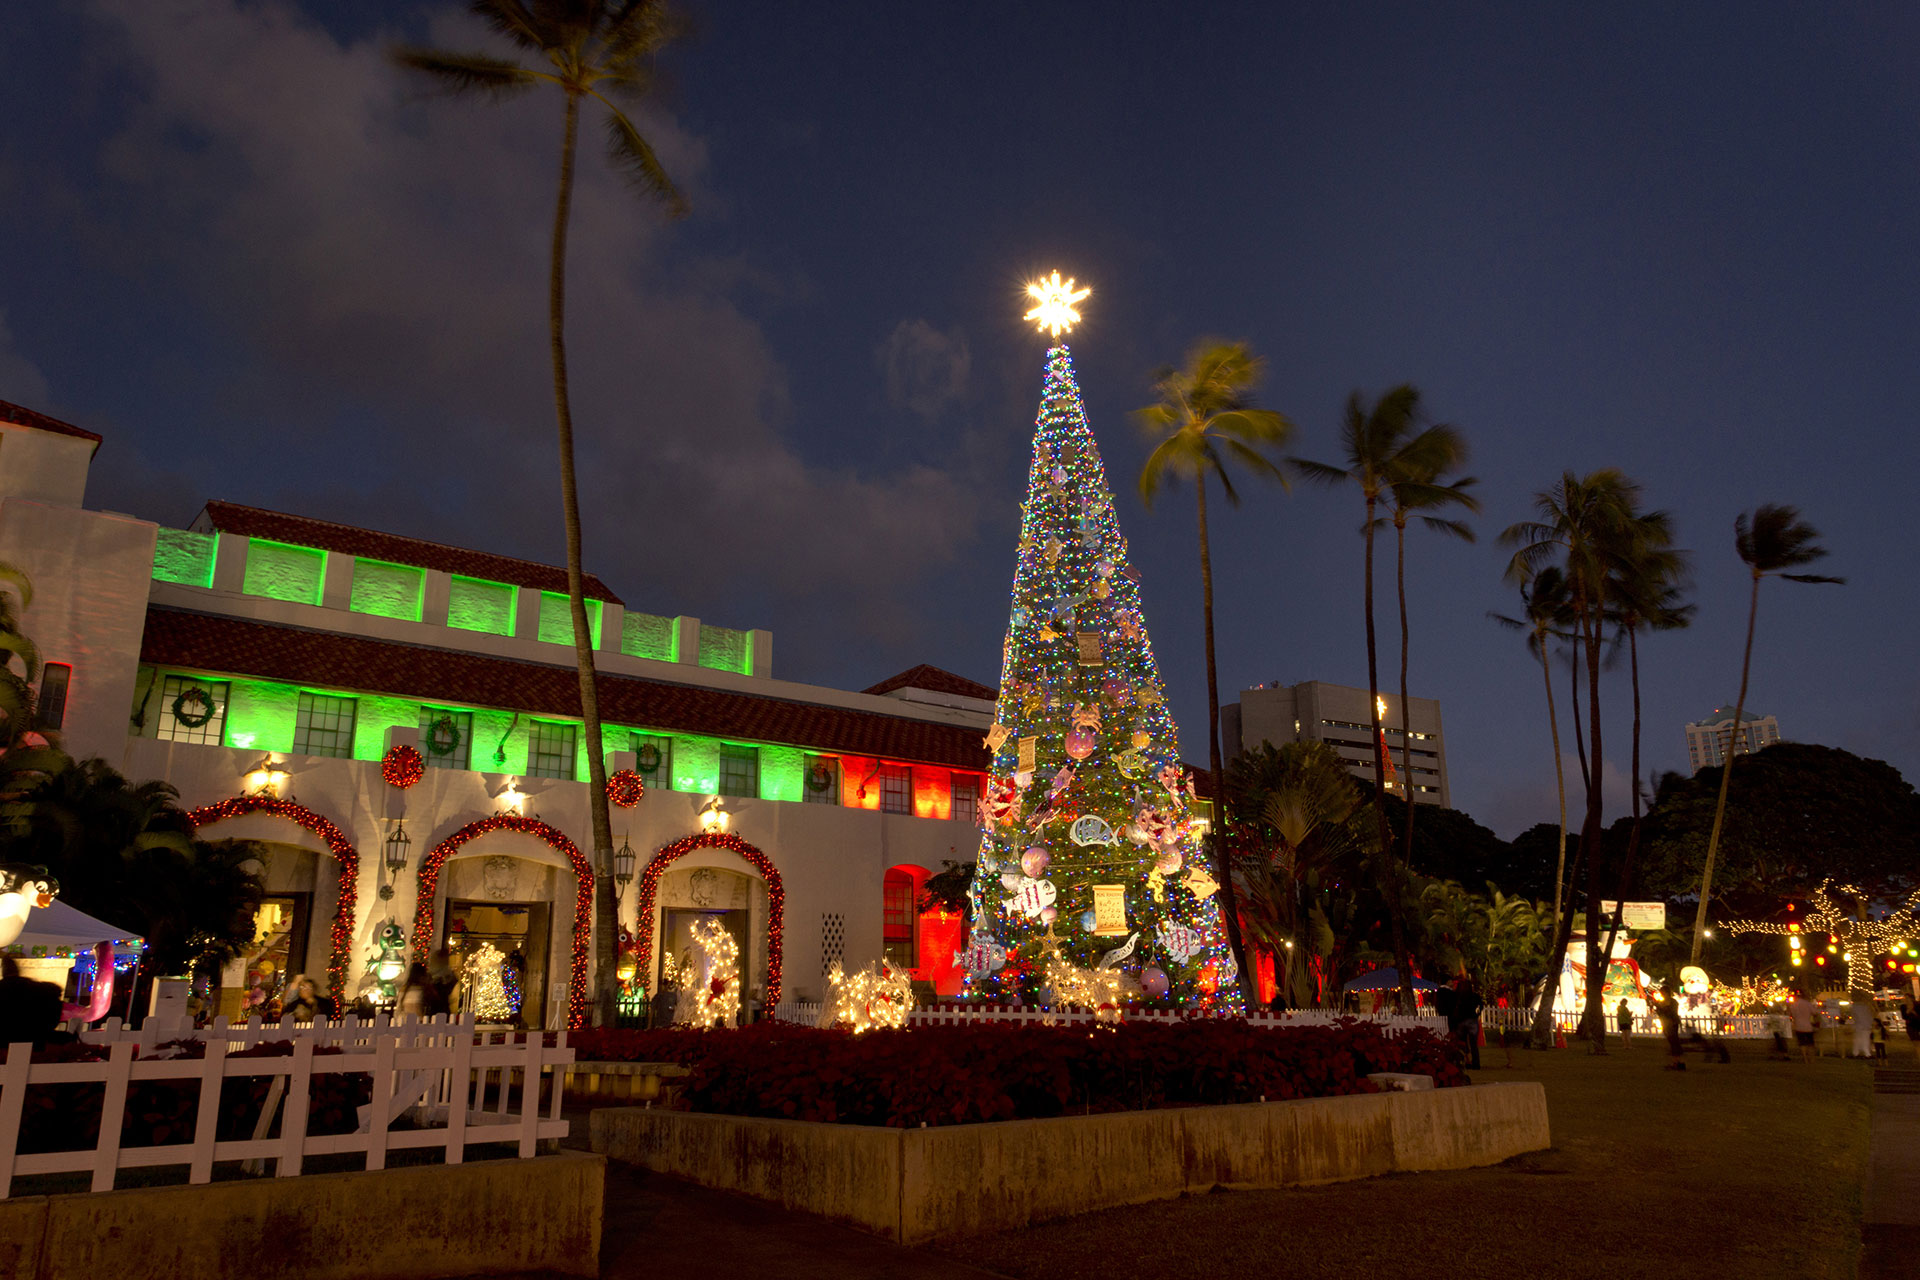 Oahu Hawaii Christmas; Courtesy of cleanfotos/Shutterstock.com